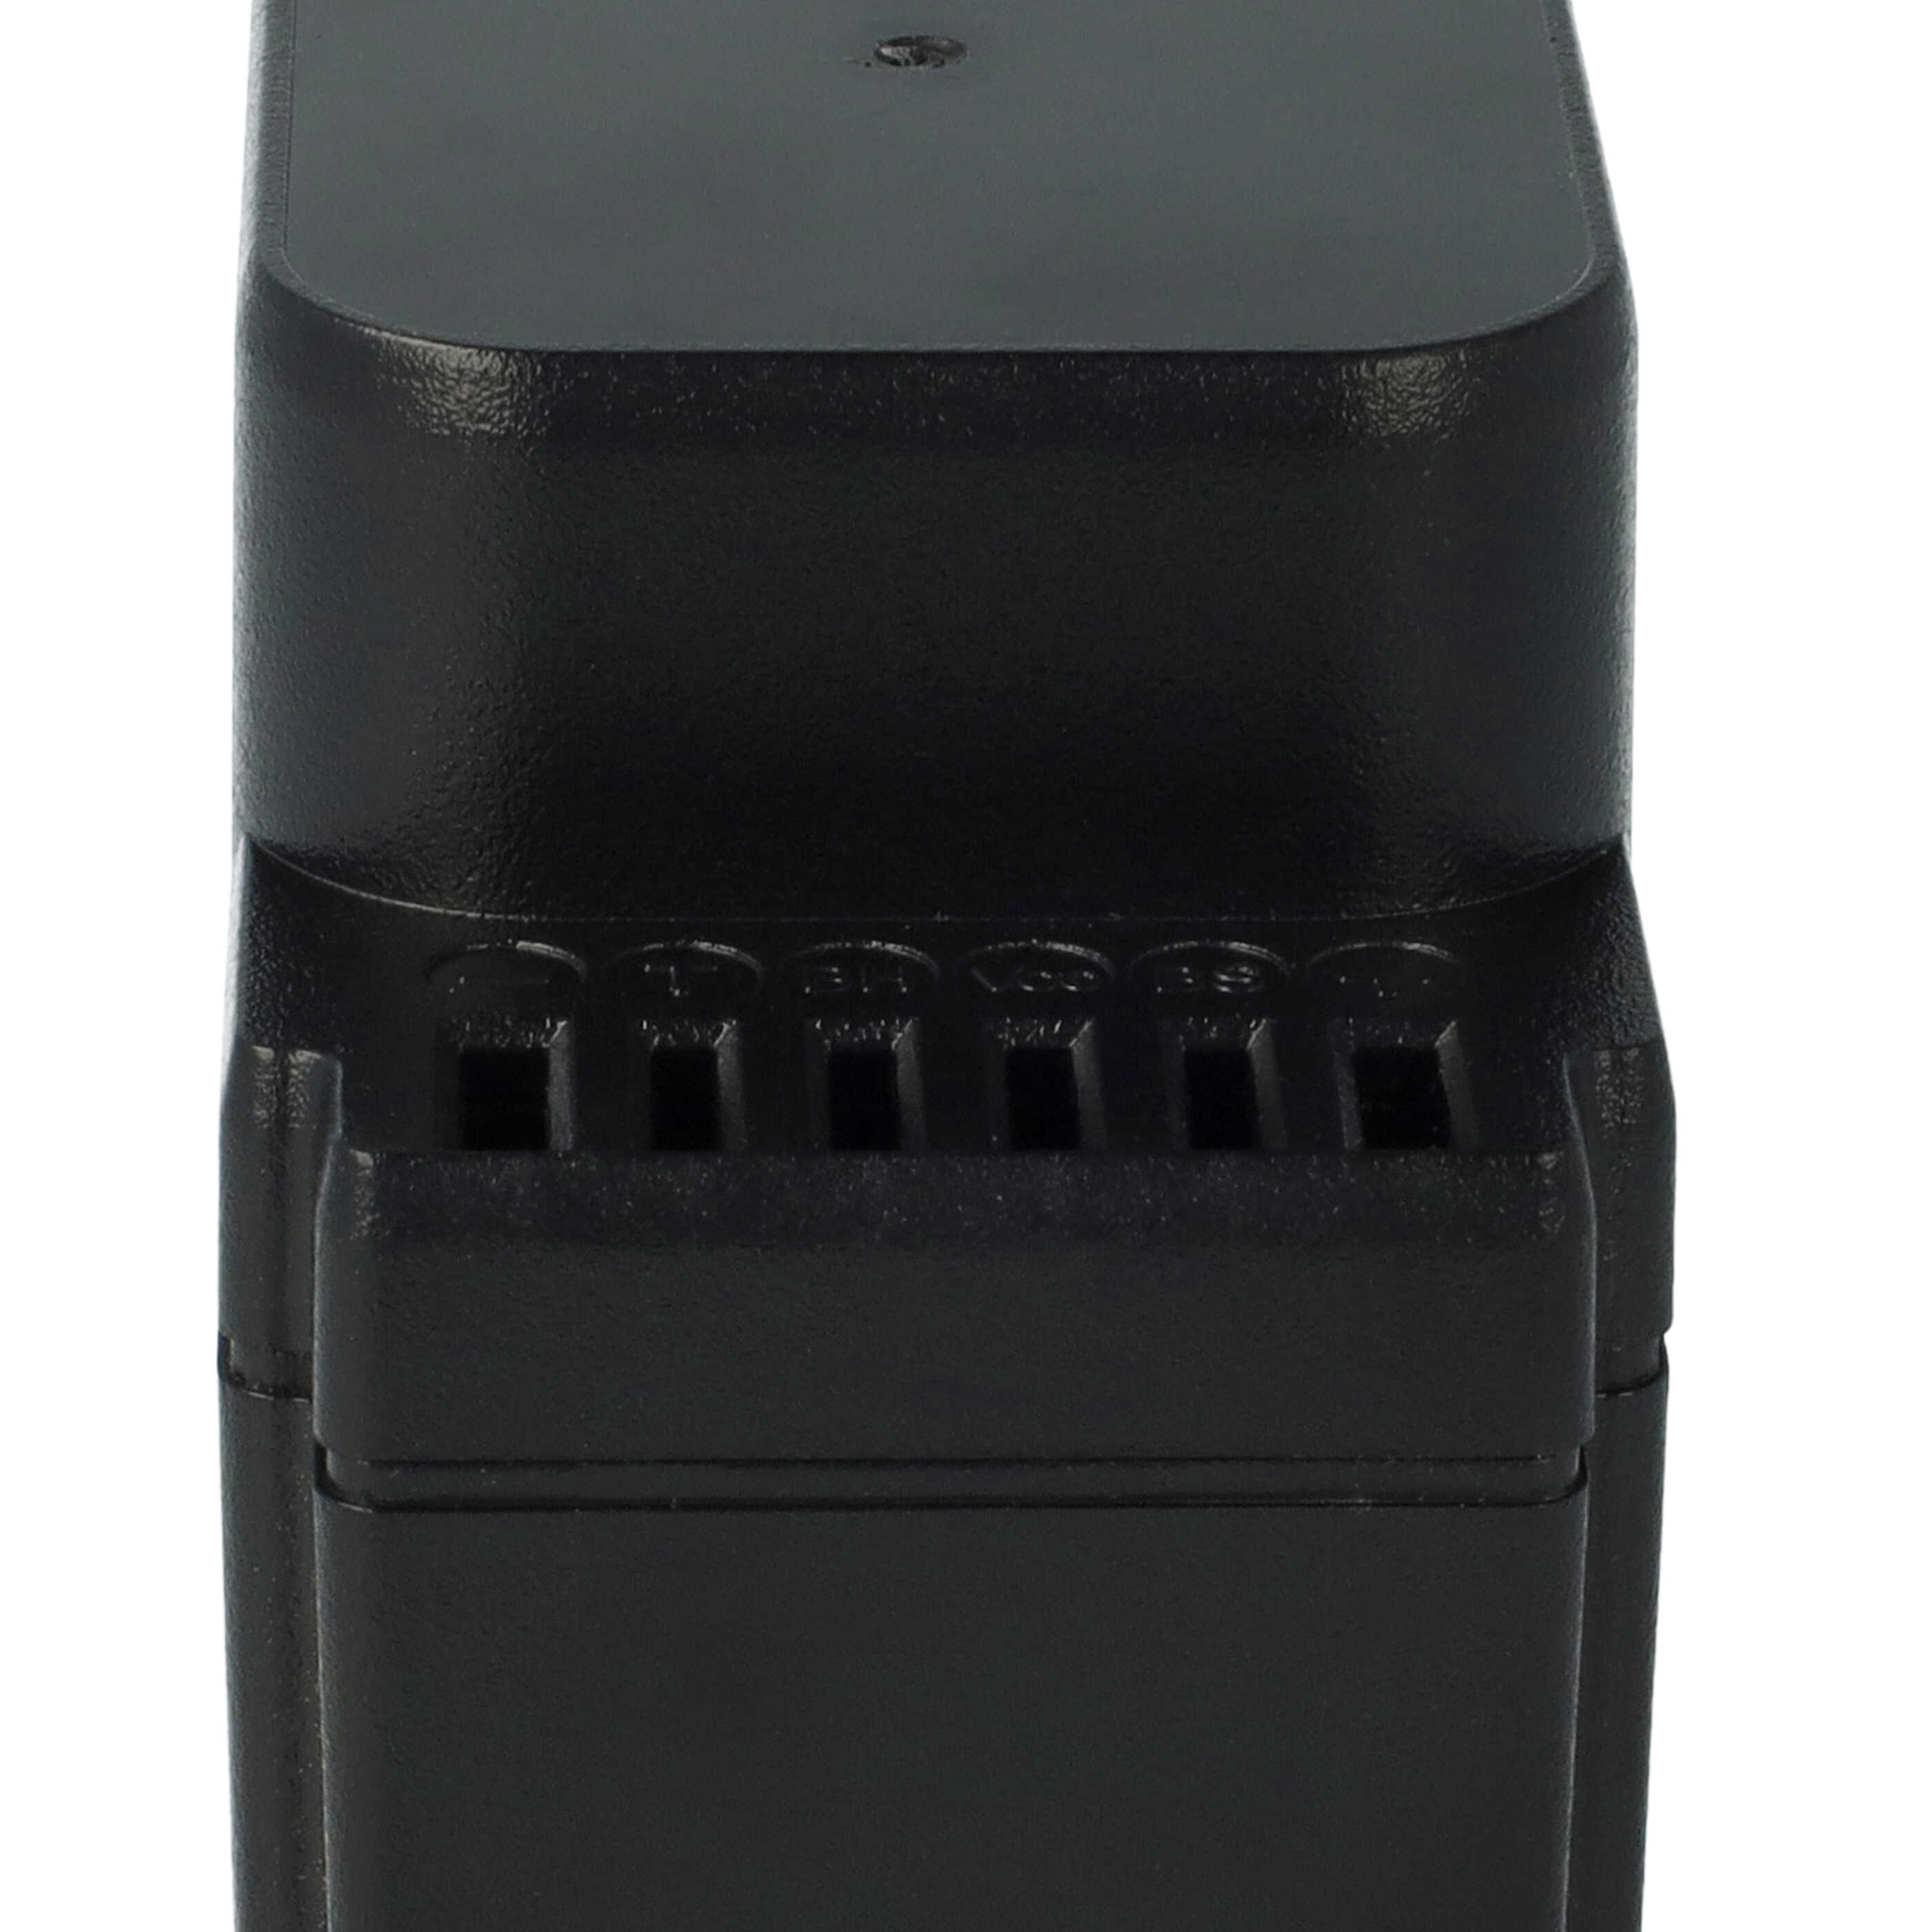 Akumulator do robota koszącego zamiennik Worx WA3226, WA3225, WA3565 - 1500 mAh 28 V Li-Ion, czarny